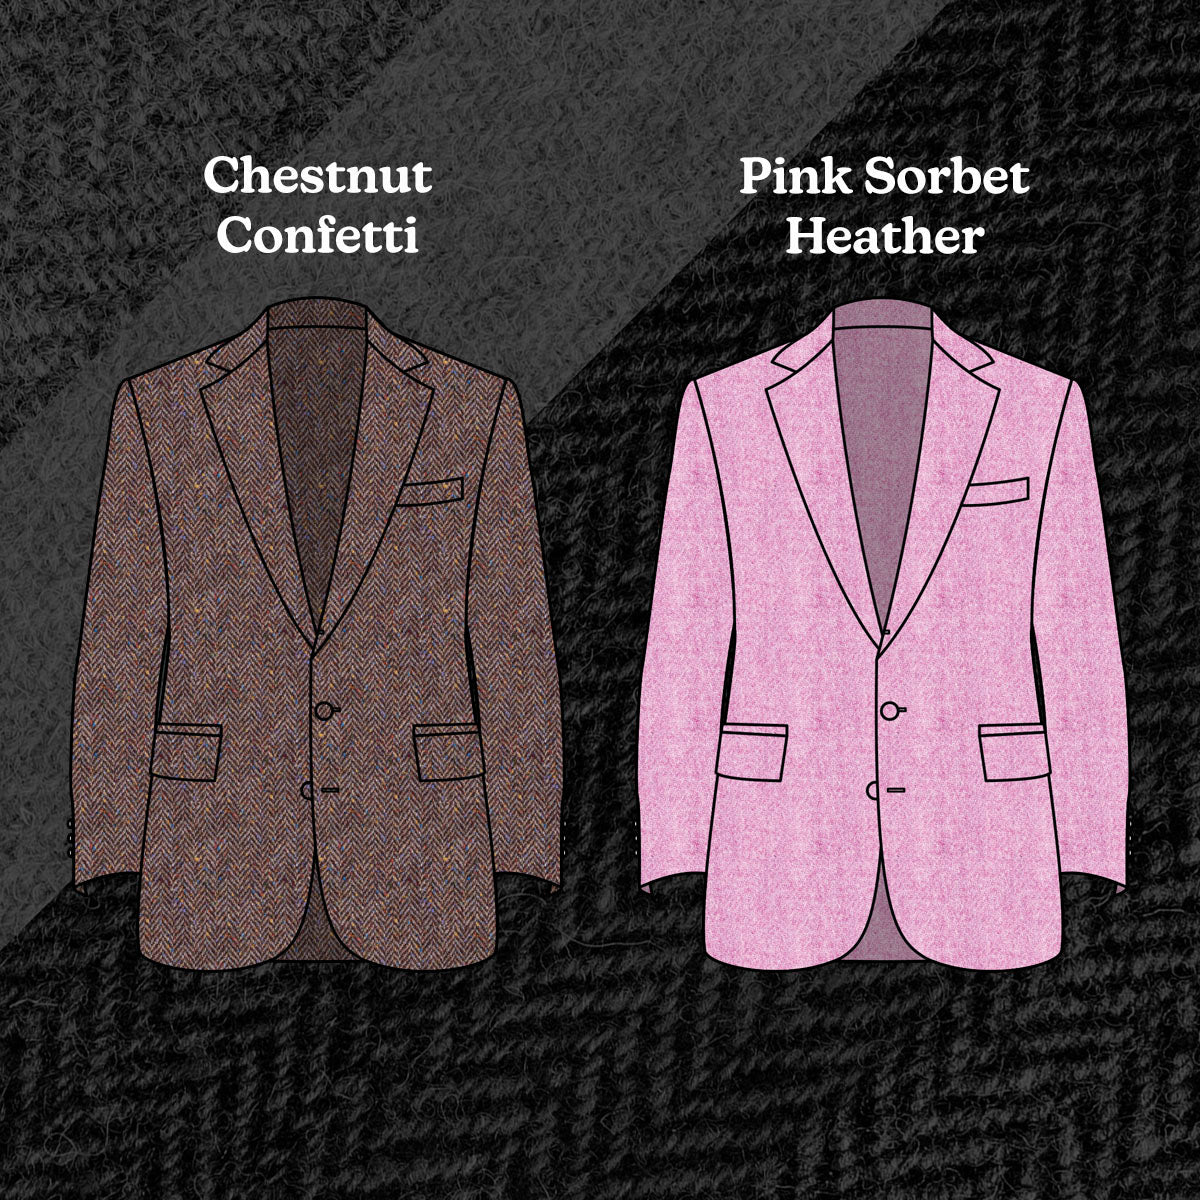 Custom Suits, Sportcoats, Doyles & Field Jackets Gallowglas & Iron Forest Tweed